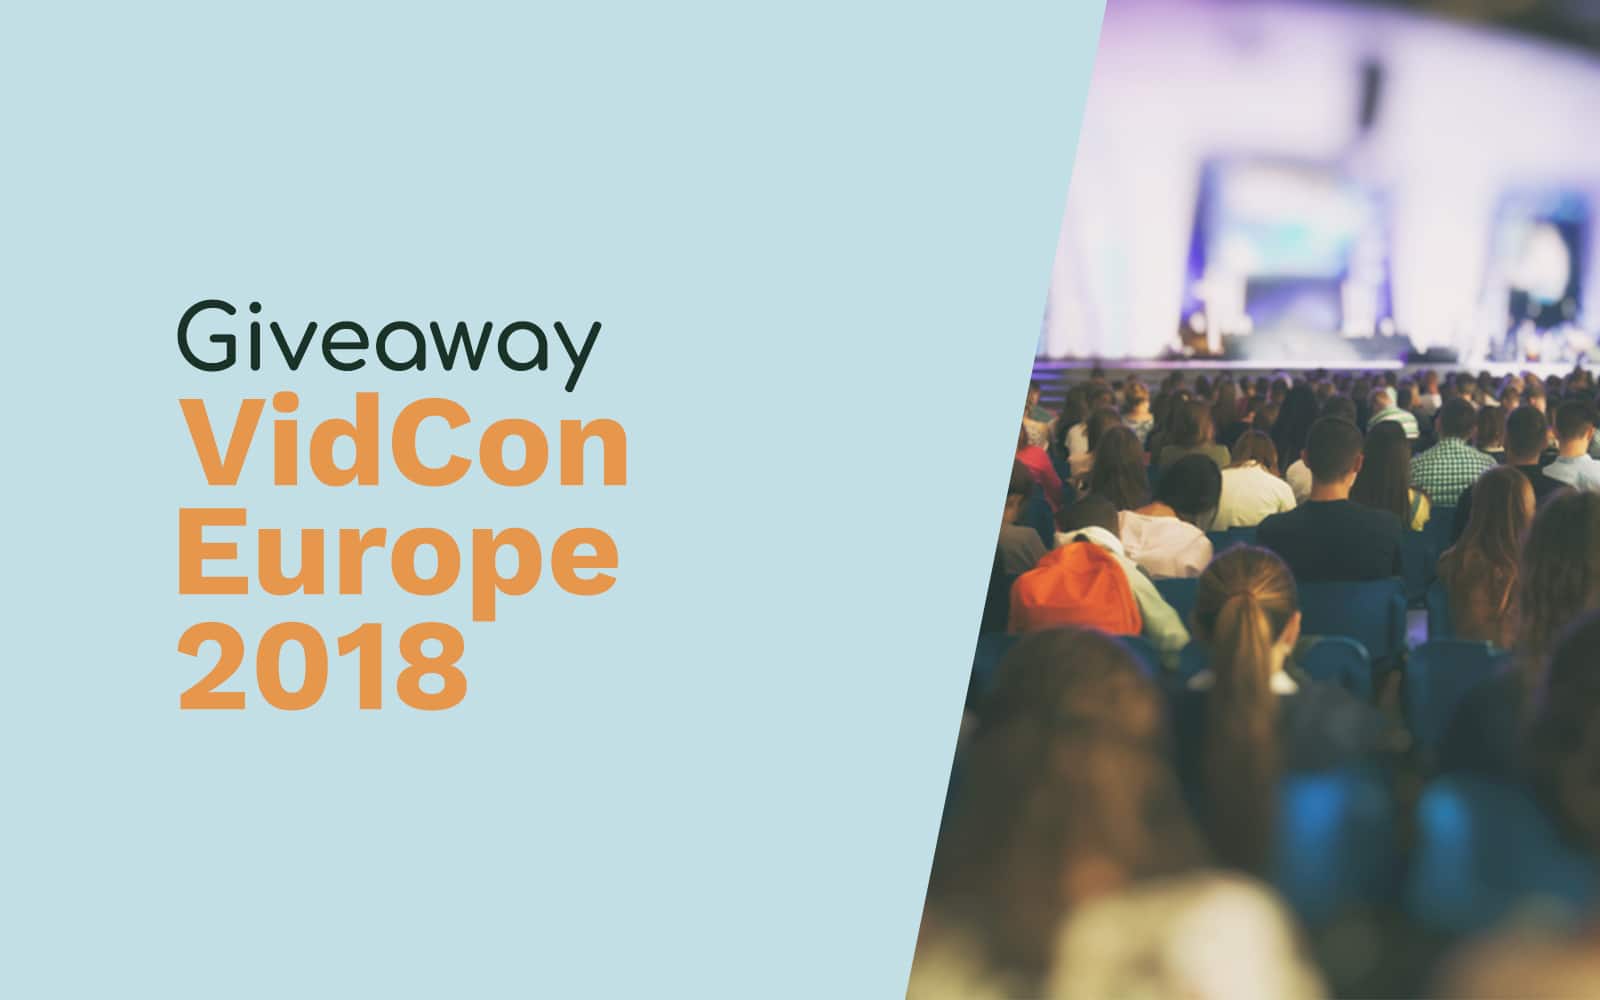 VidCon Europe 2018 Giveaway Podcasting vidcon europe 2018 Music Radio Creative